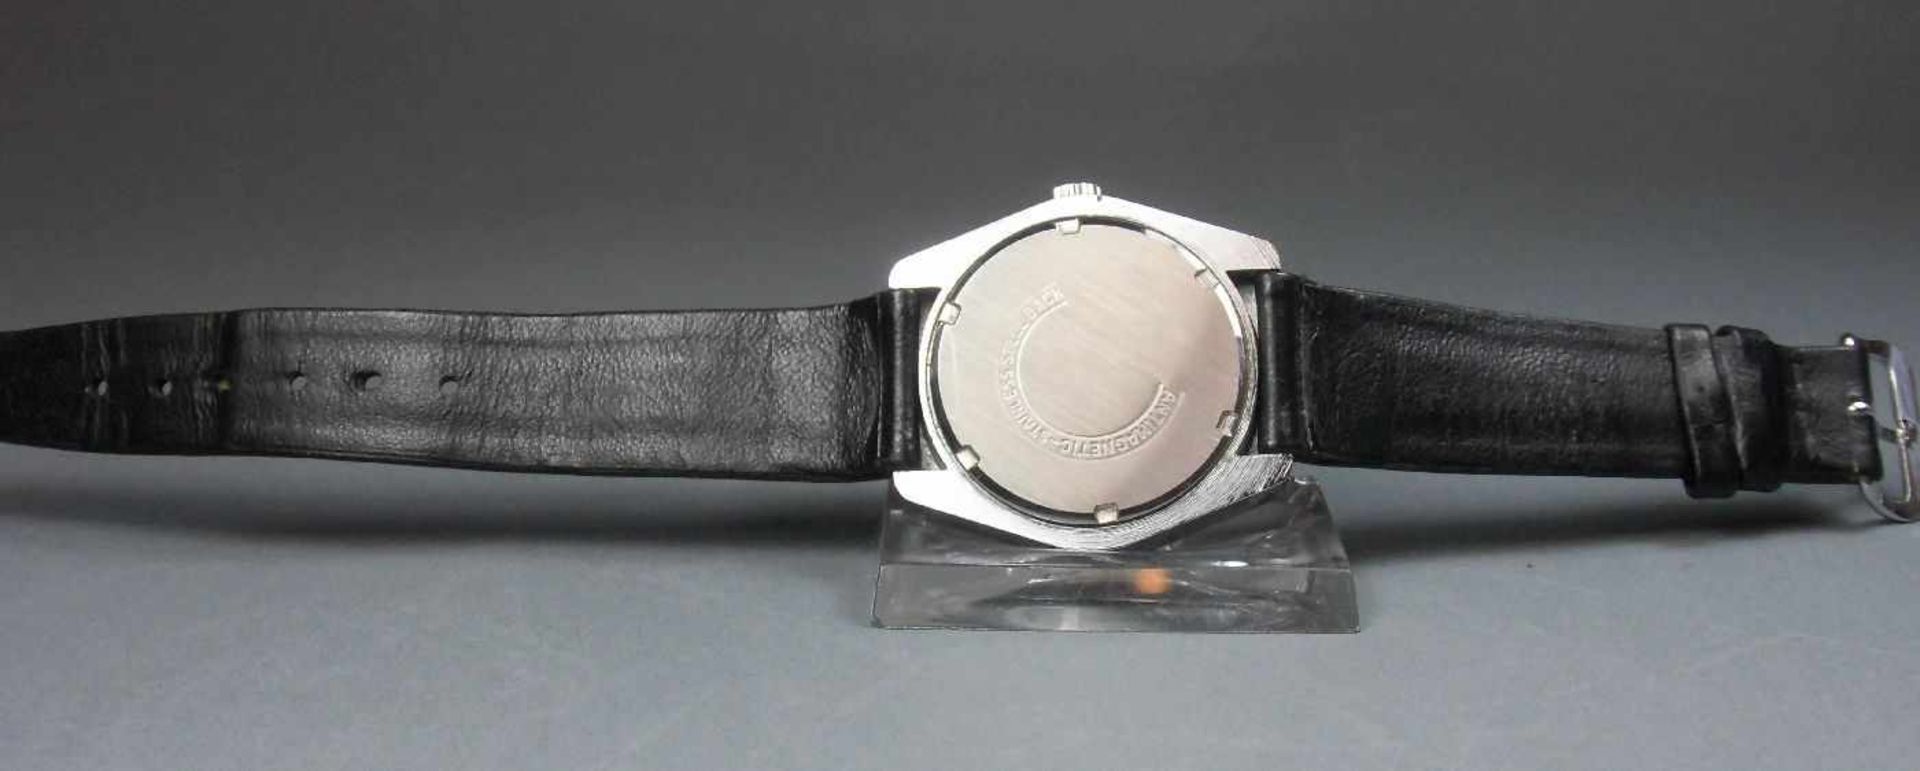 ARMBANDUHR: PRIMATO SUPER-AUTOMATIC / wristwatch, Manufaktur Ewald Fleck & Co. KG / Pforzheim. - Bild 6 aus 7